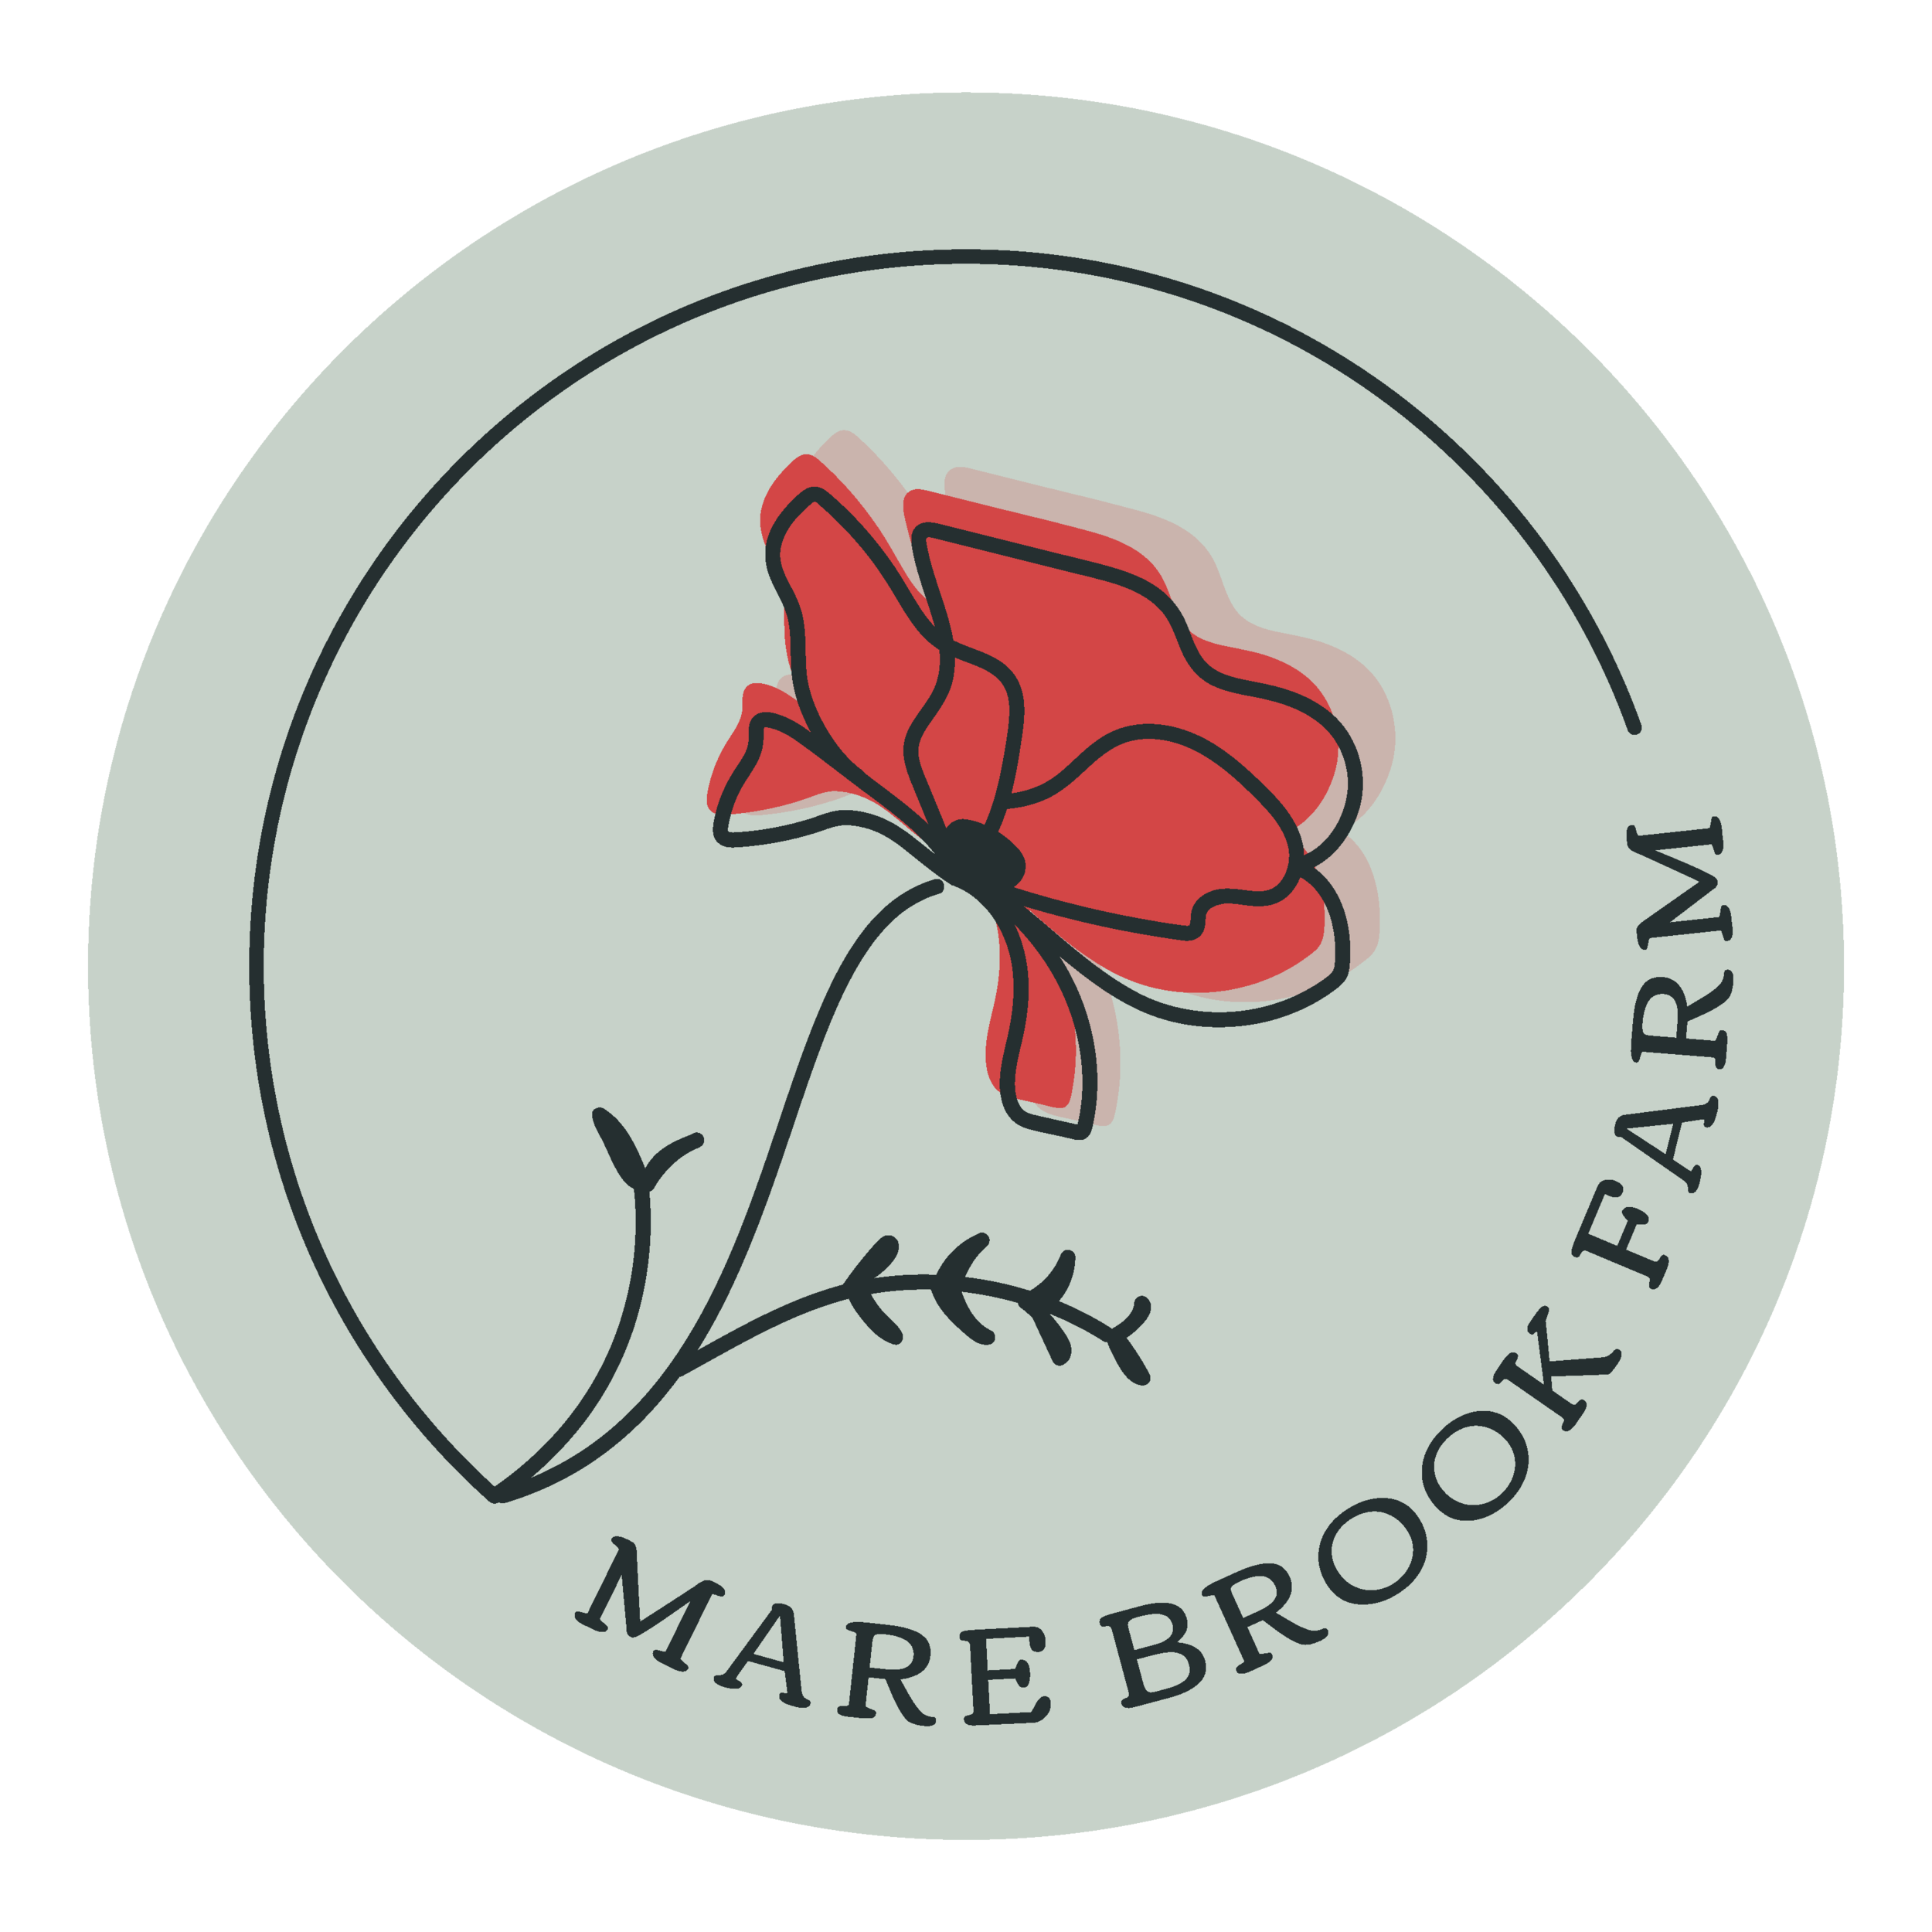 Mare Brook Farm_Badge Green.png